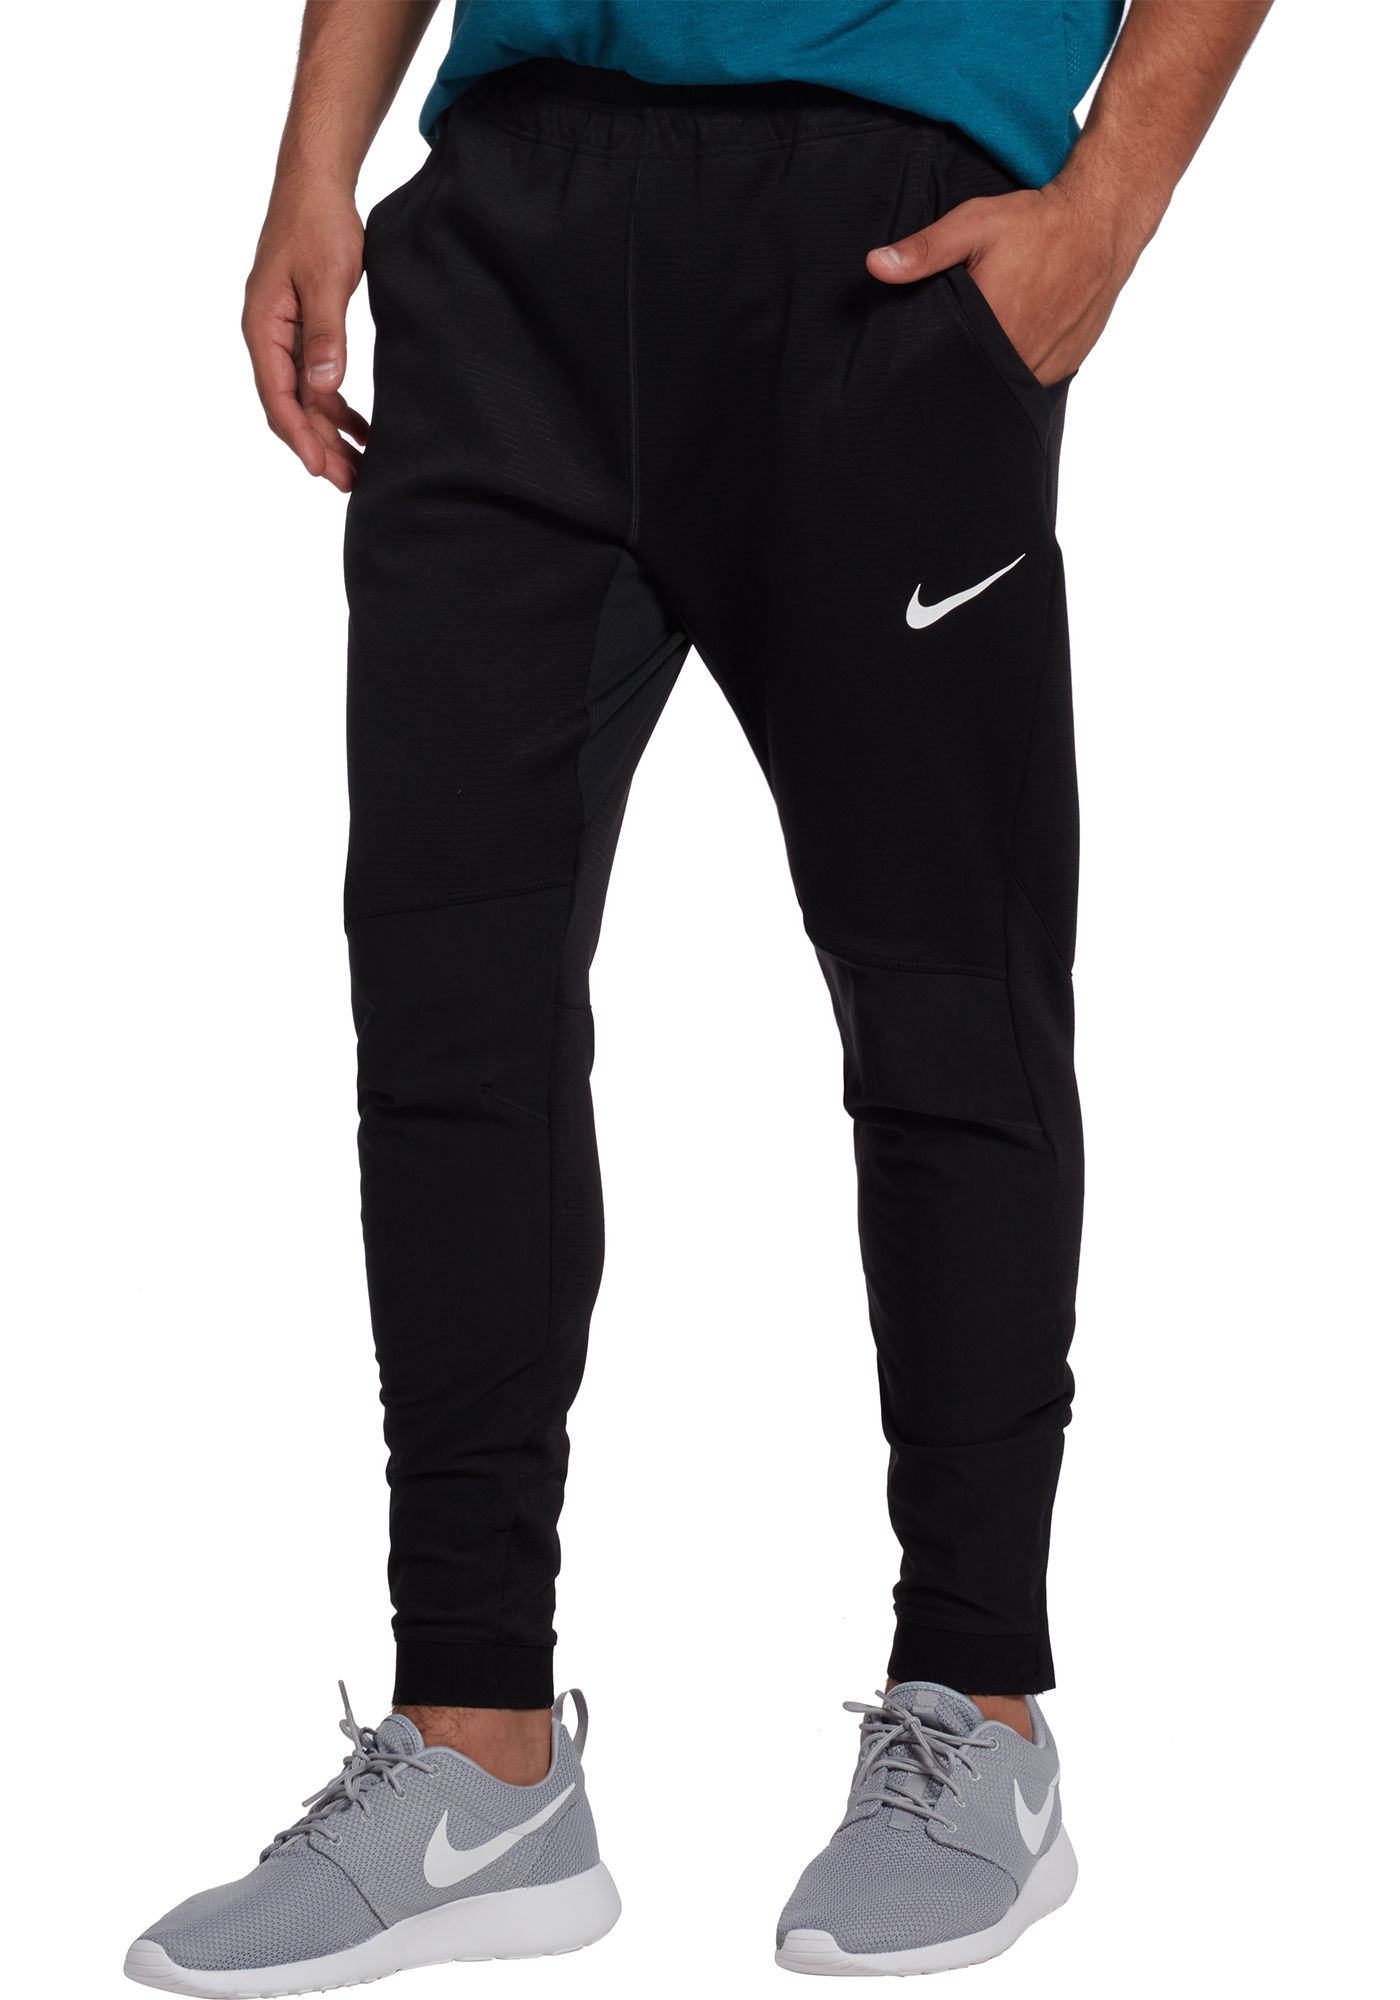 Nike Men's Pro Pants | DICK'S Sporting Goods